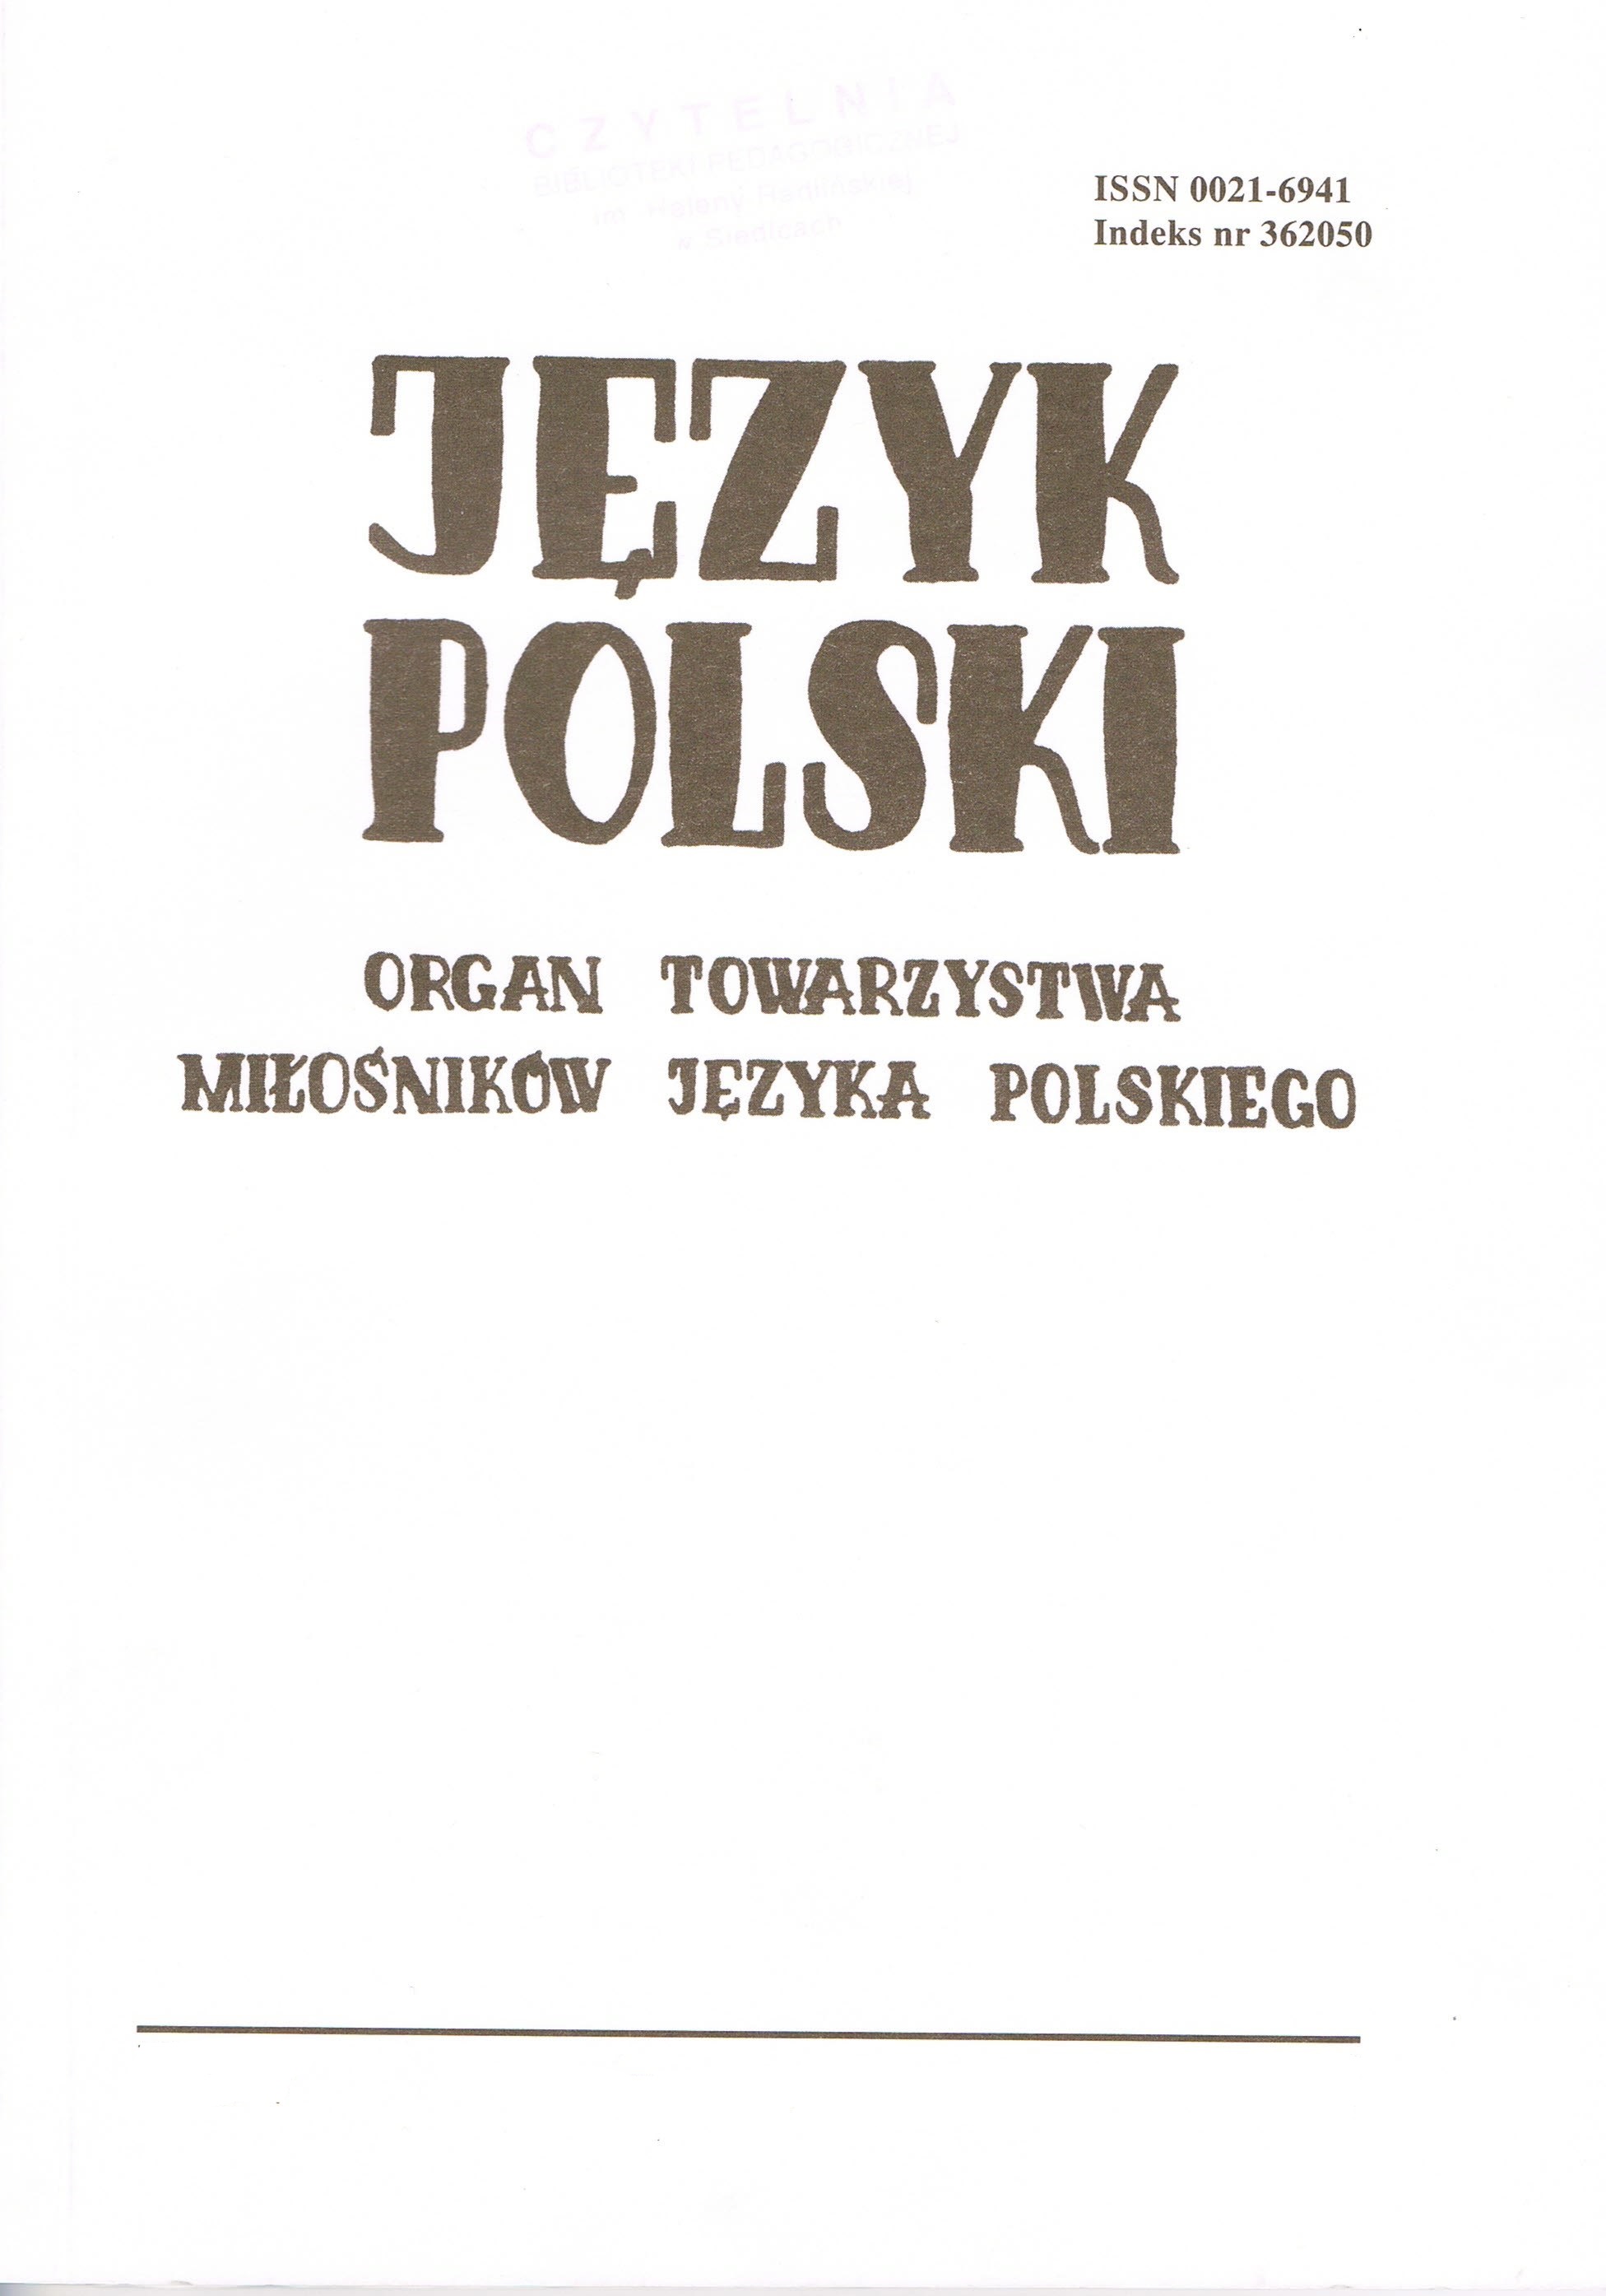 Alejka, bukiet, sponsor, tester — on a certain type of semantic innovations in Polish Cover Image